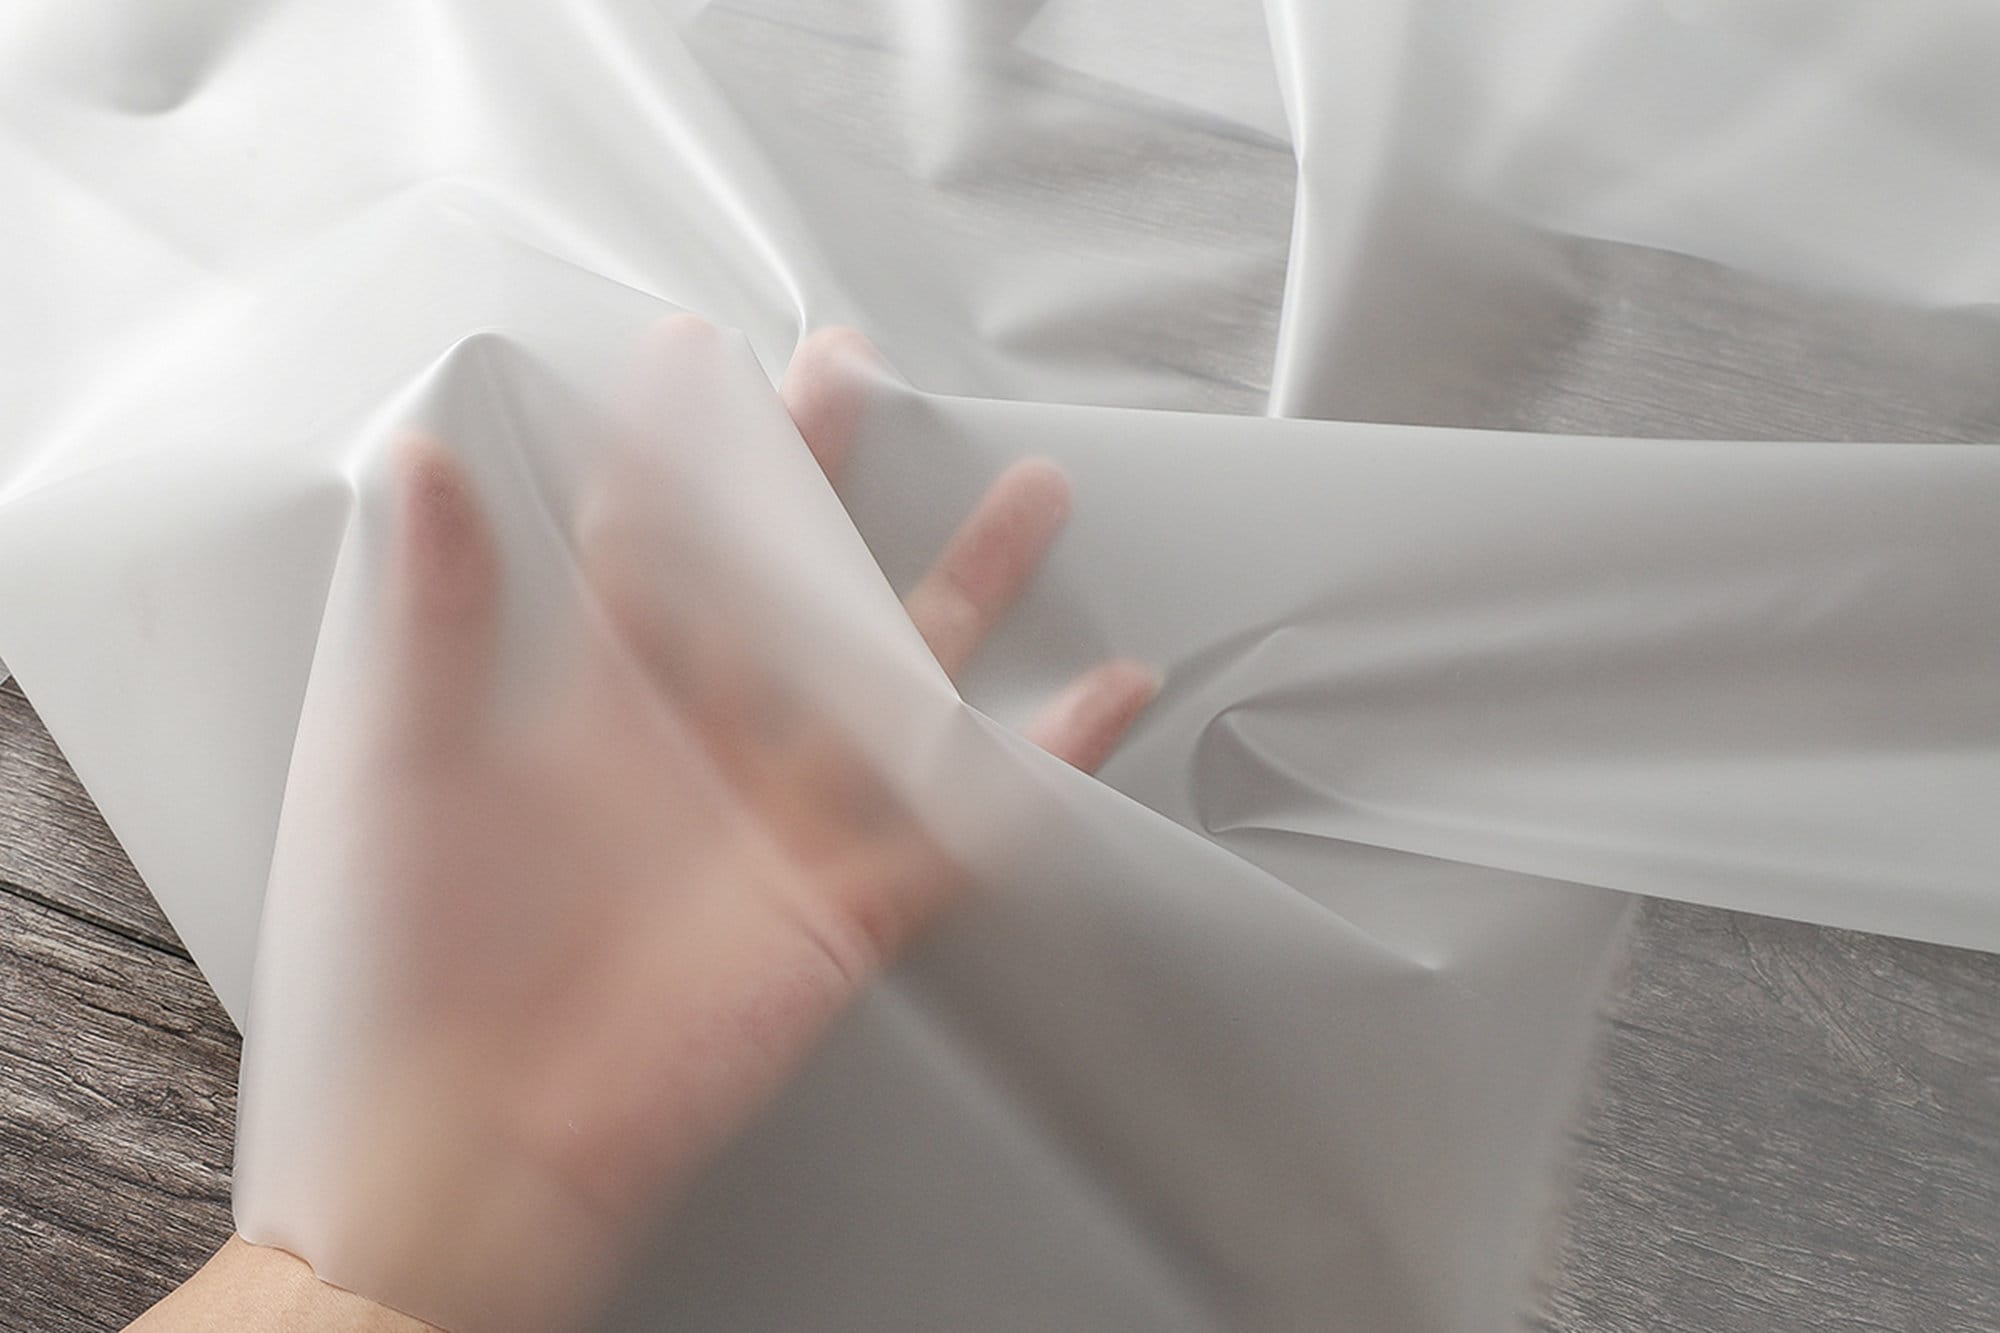 Bonded Nylon Spandx TPU Coated Fabric With Waterproof Film